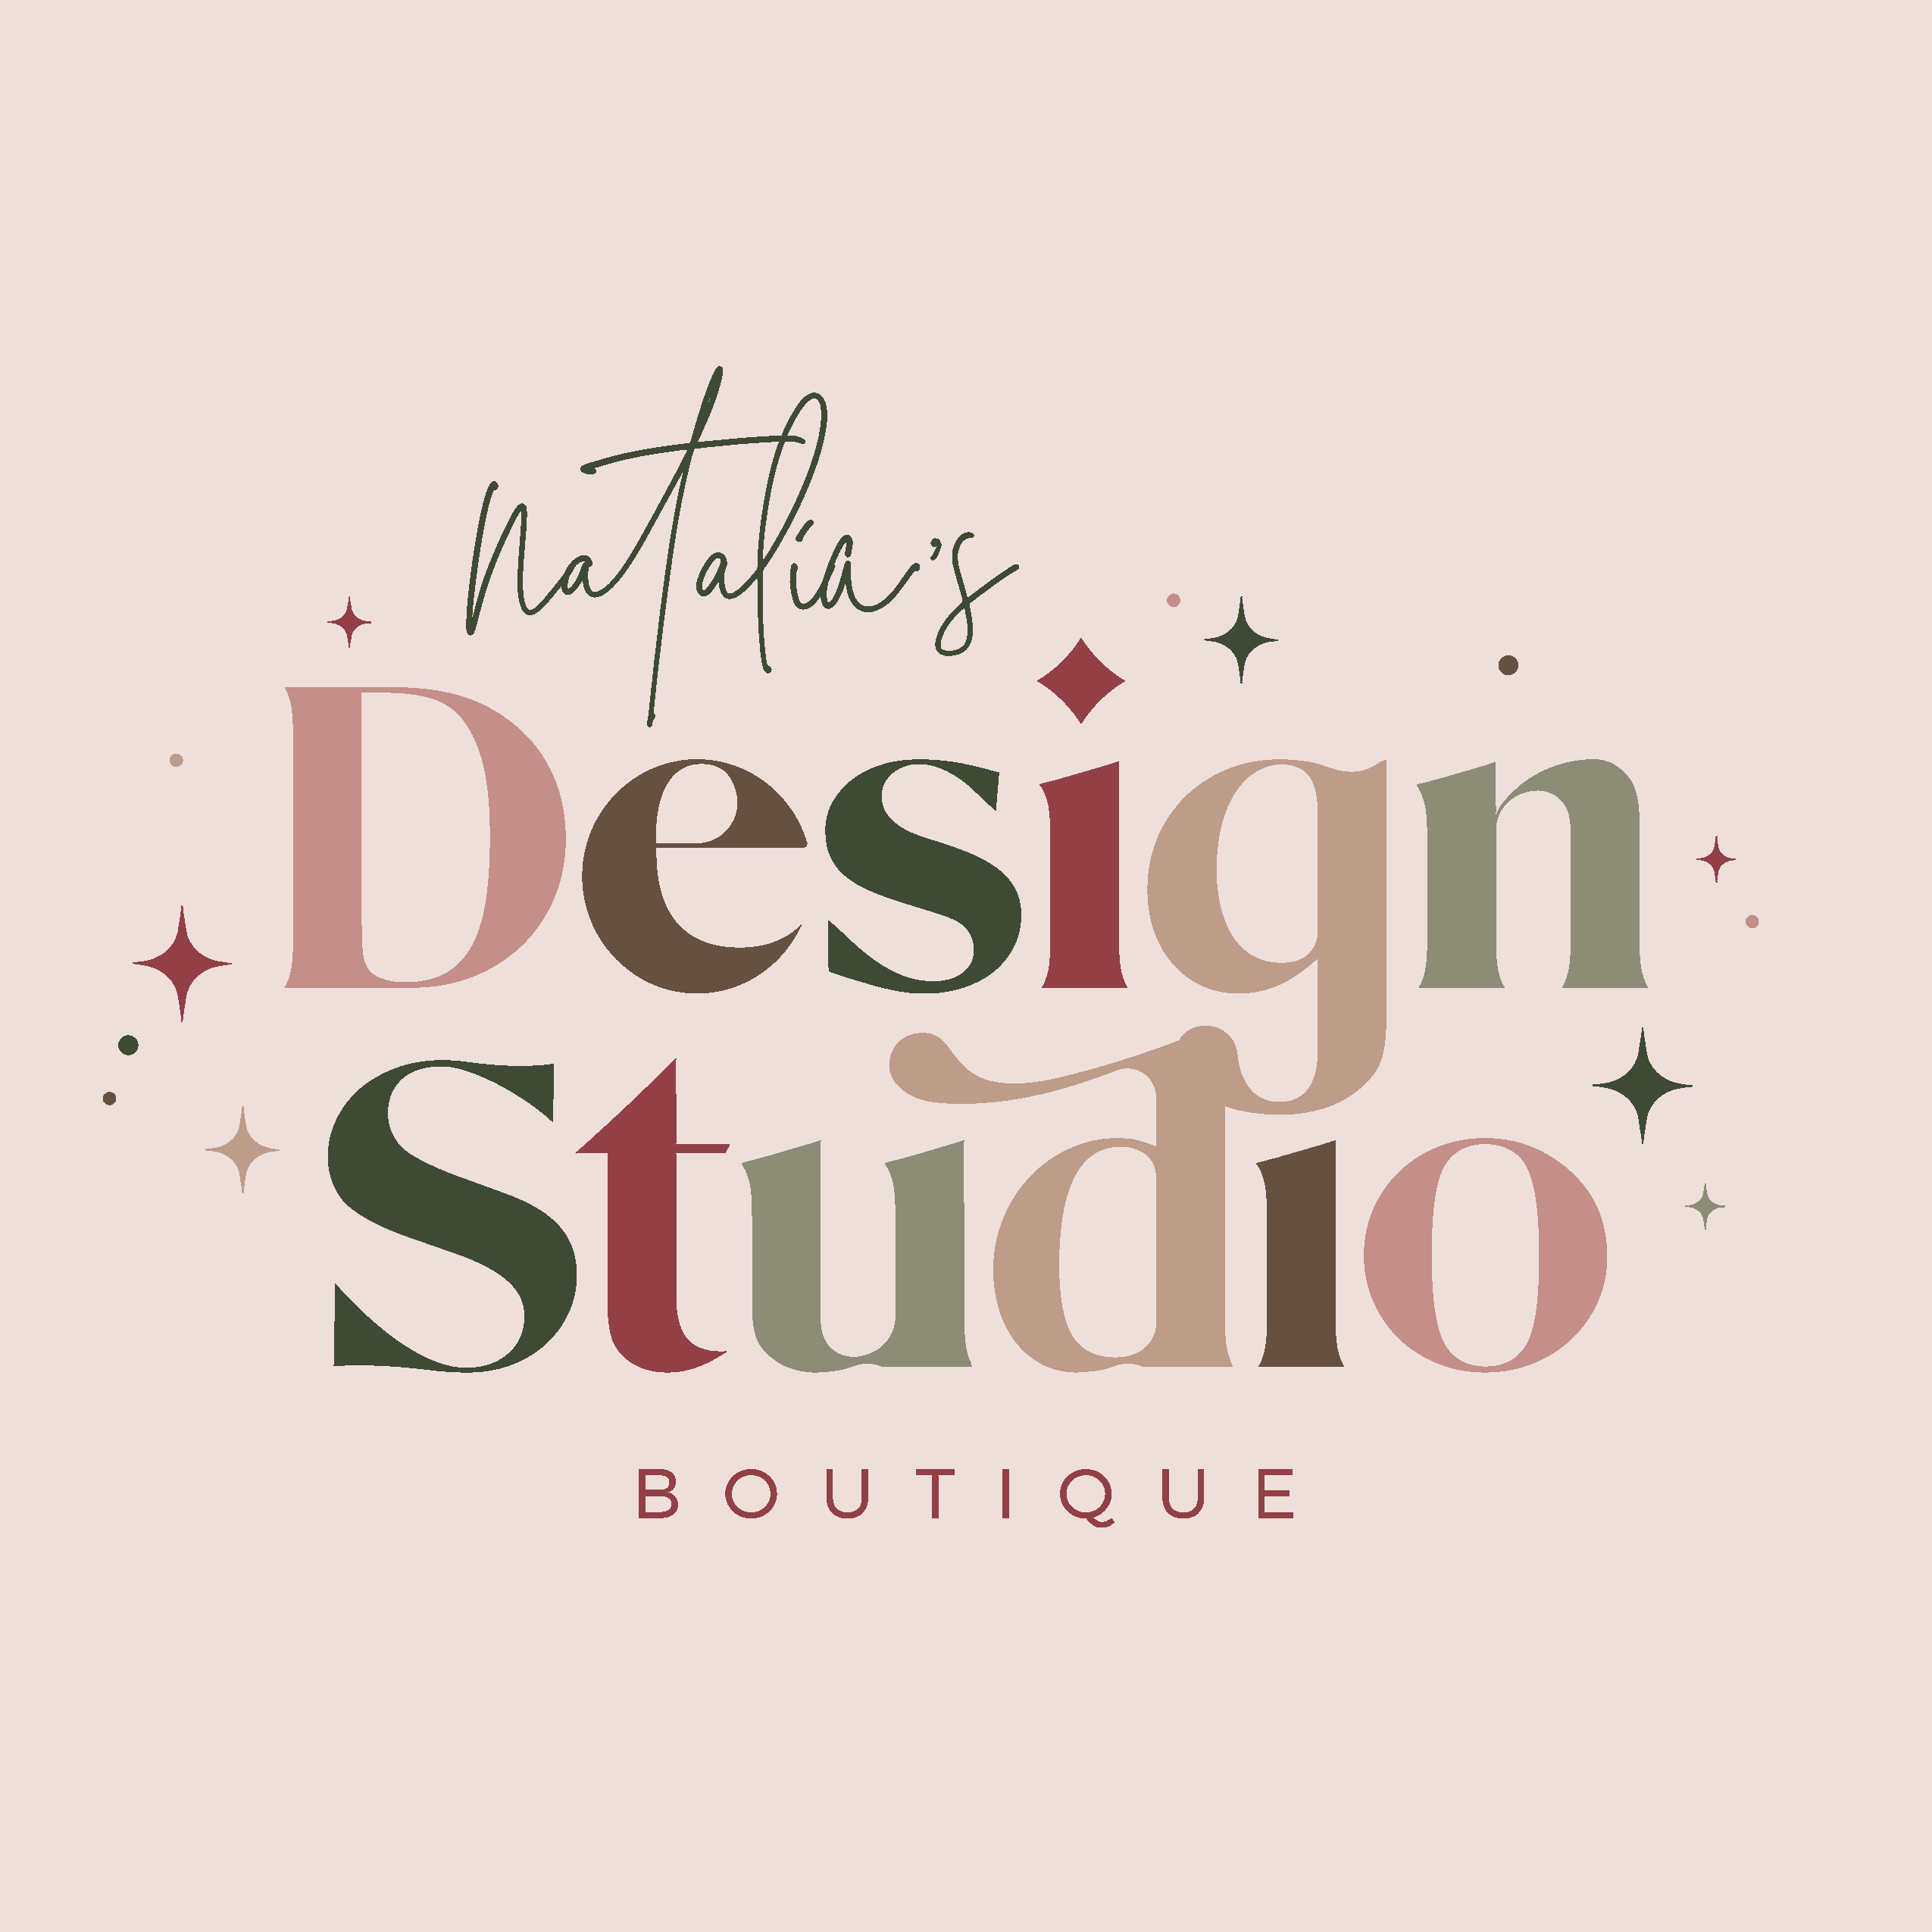 Natalia’s Design Studio